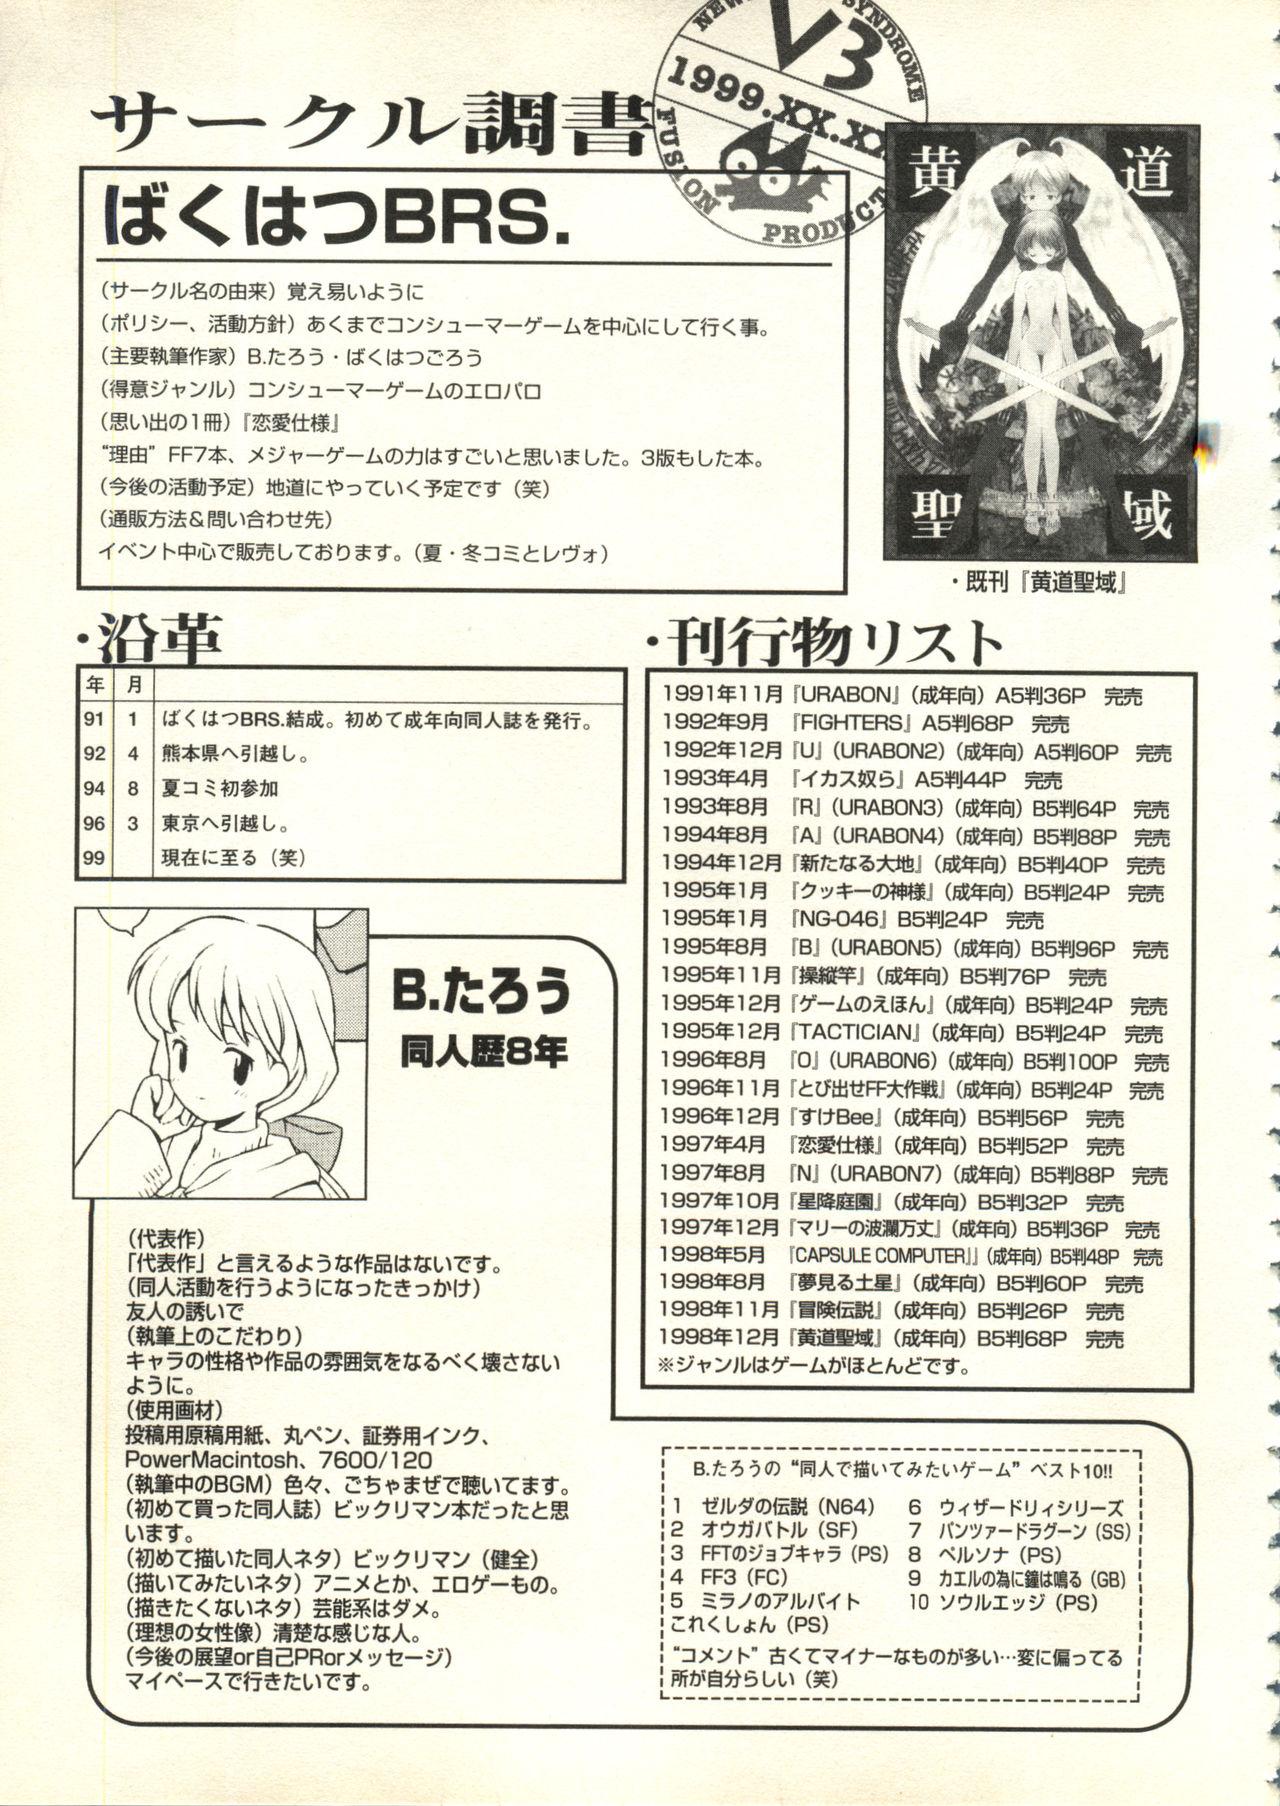 [Anthology] Bishoujo Shoukougun V3 (1) '99 Summer Edition (Various) 105